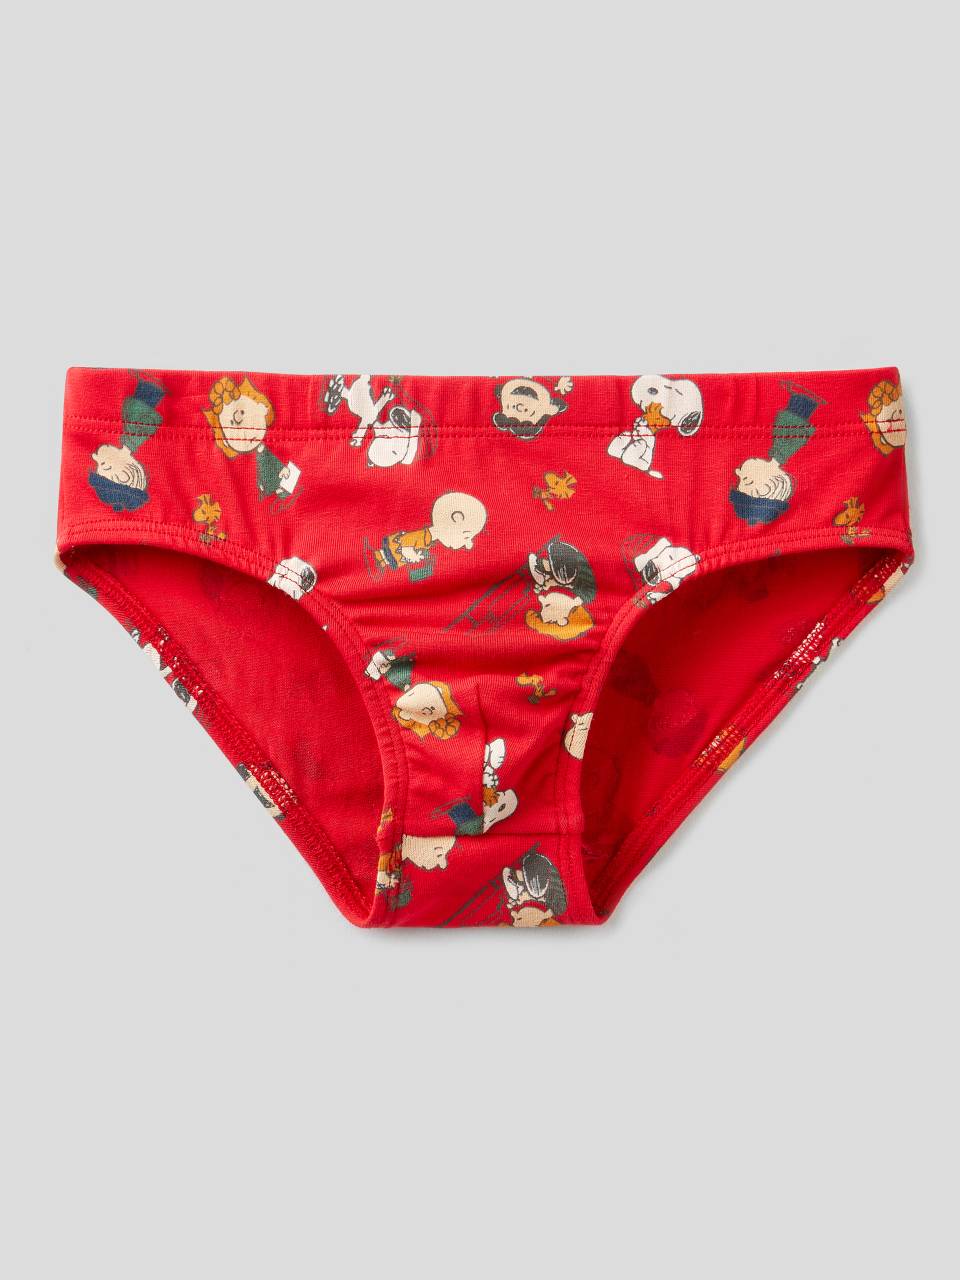 Peanuts Christmas underwear - Red